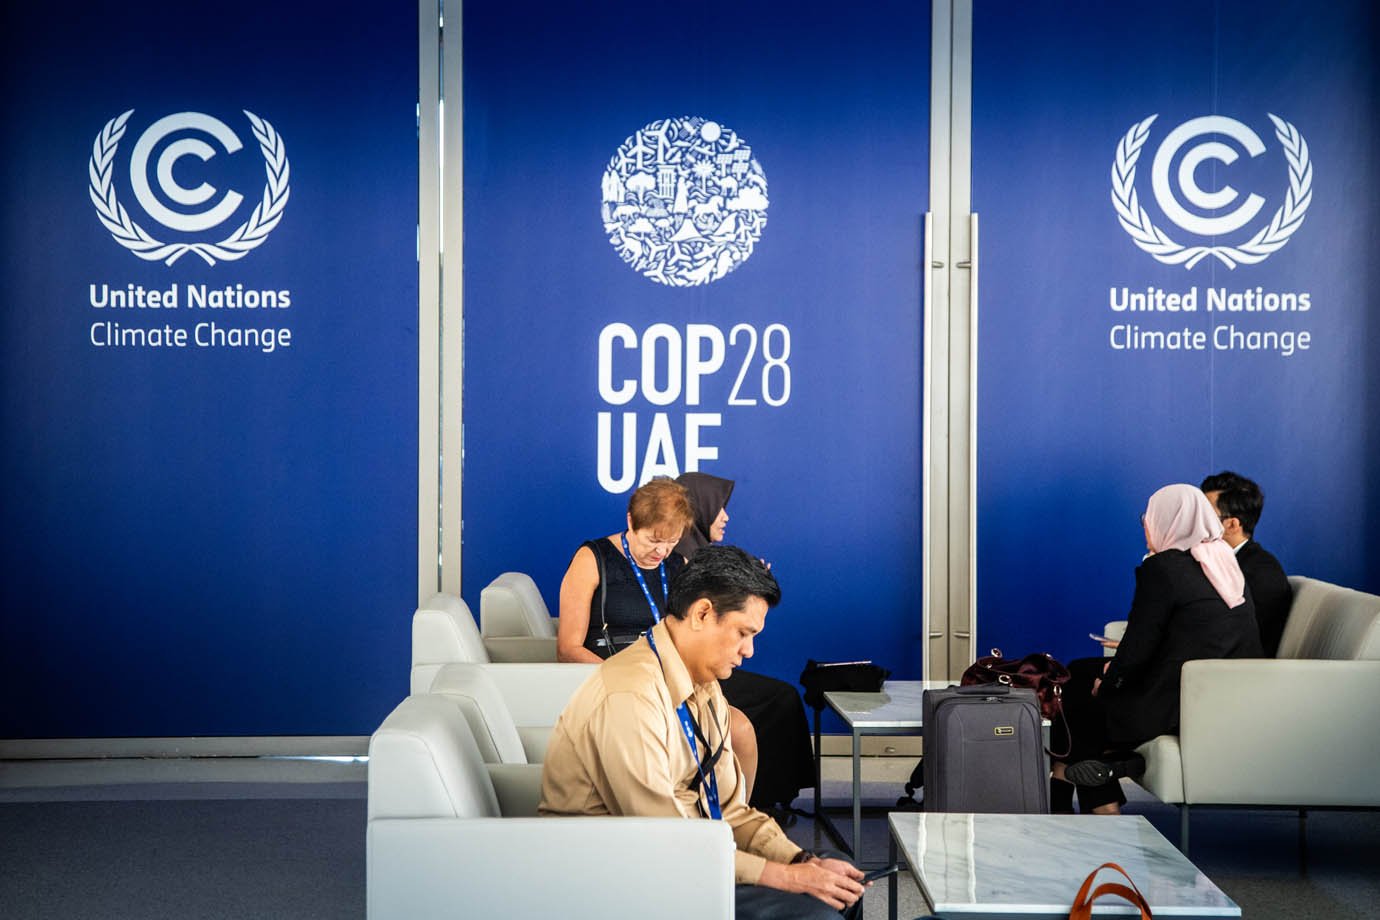 COP28 - DUBAI

FOTO: LEANDRO FONSECA
DATA: 02/12/2023